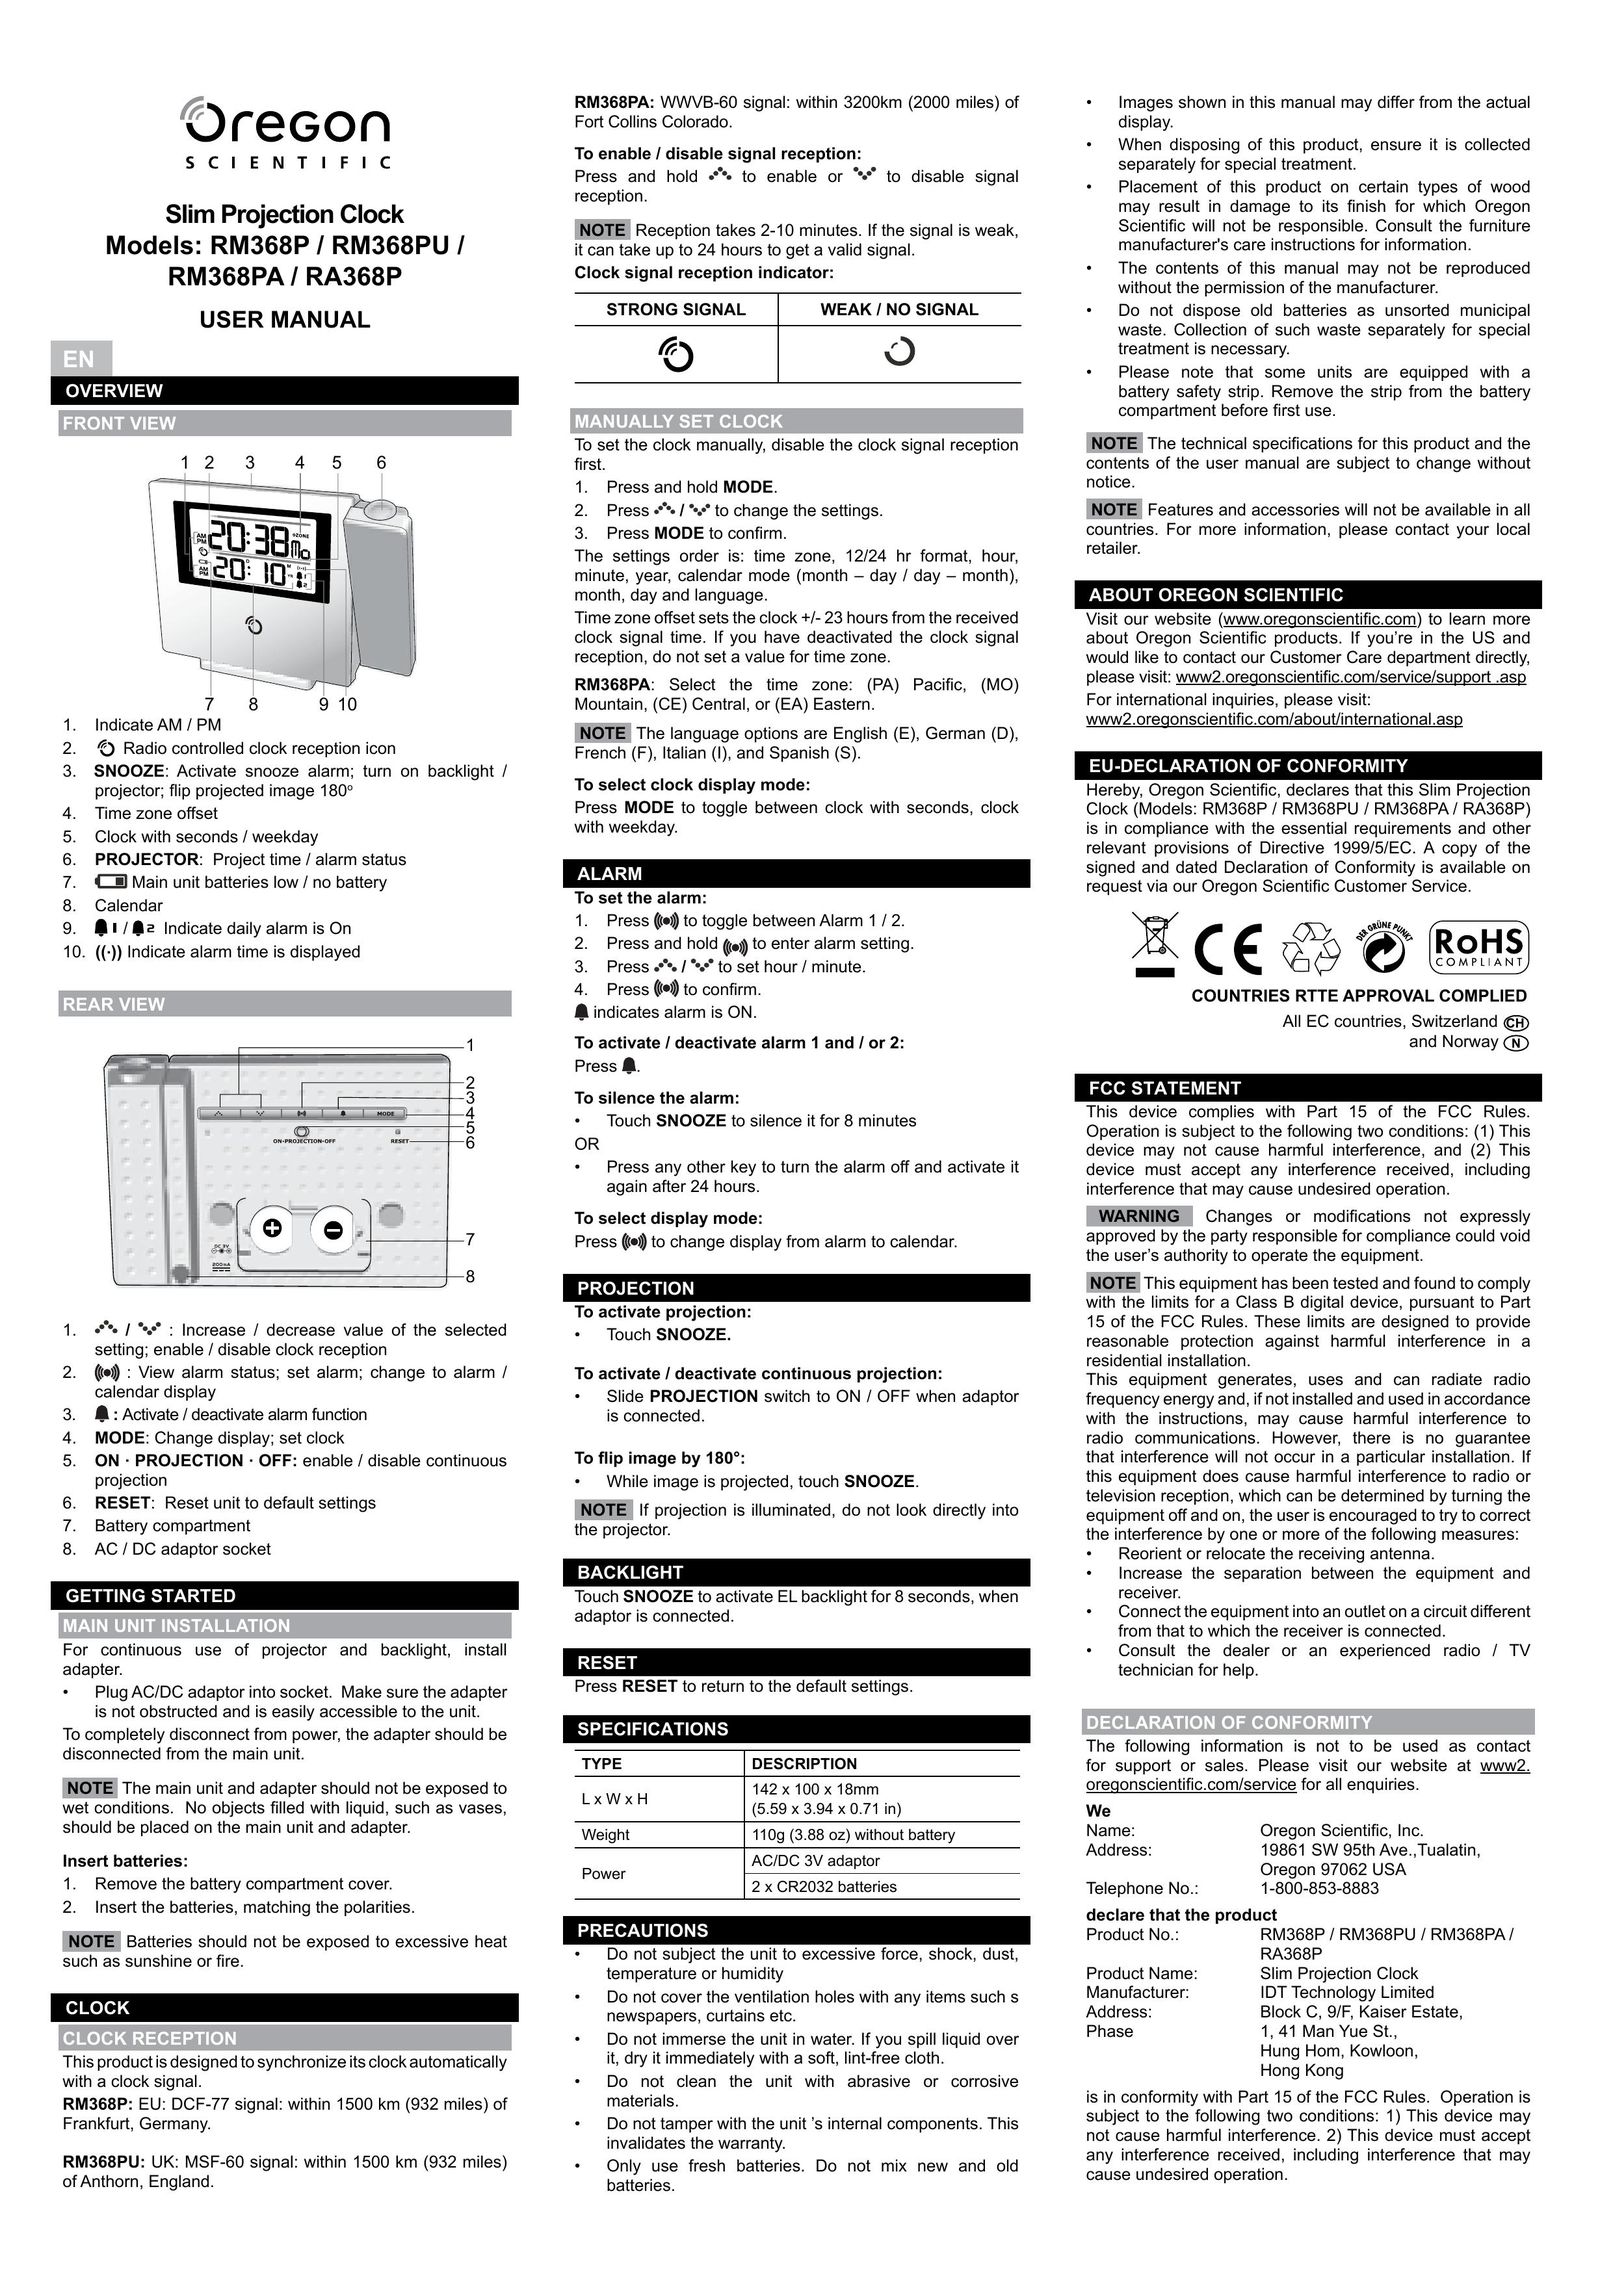 Oregon RM368P Clock User Manual